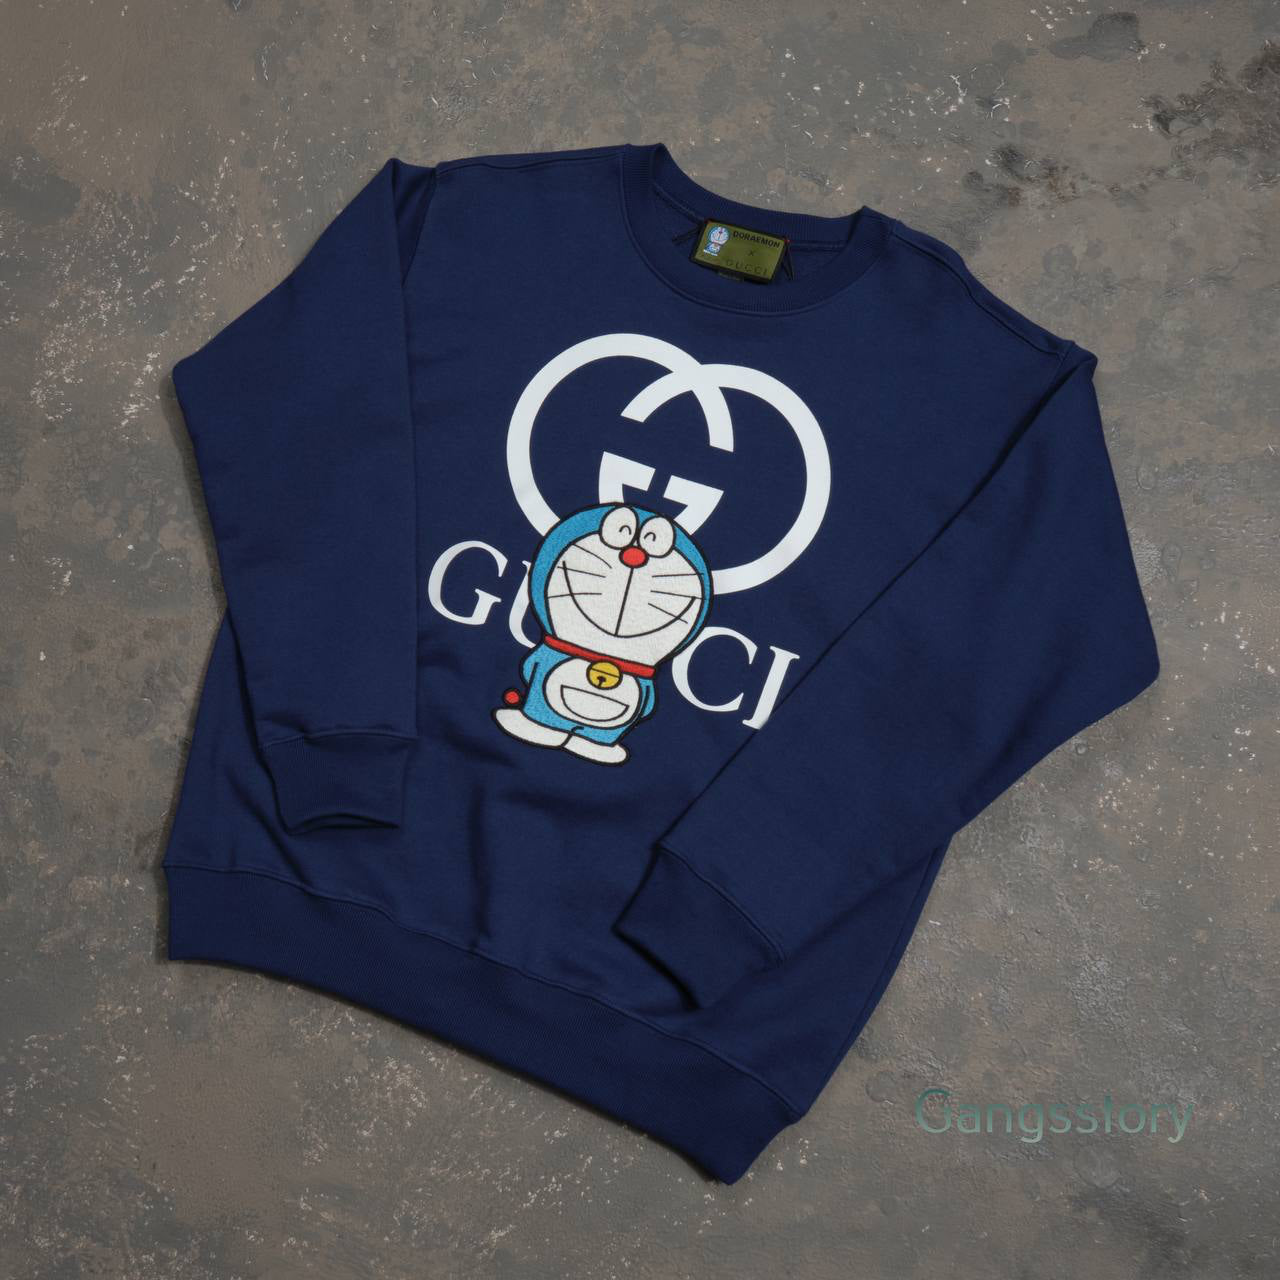 Gucci x Doraemon Logo Print Sweatshirt Blue